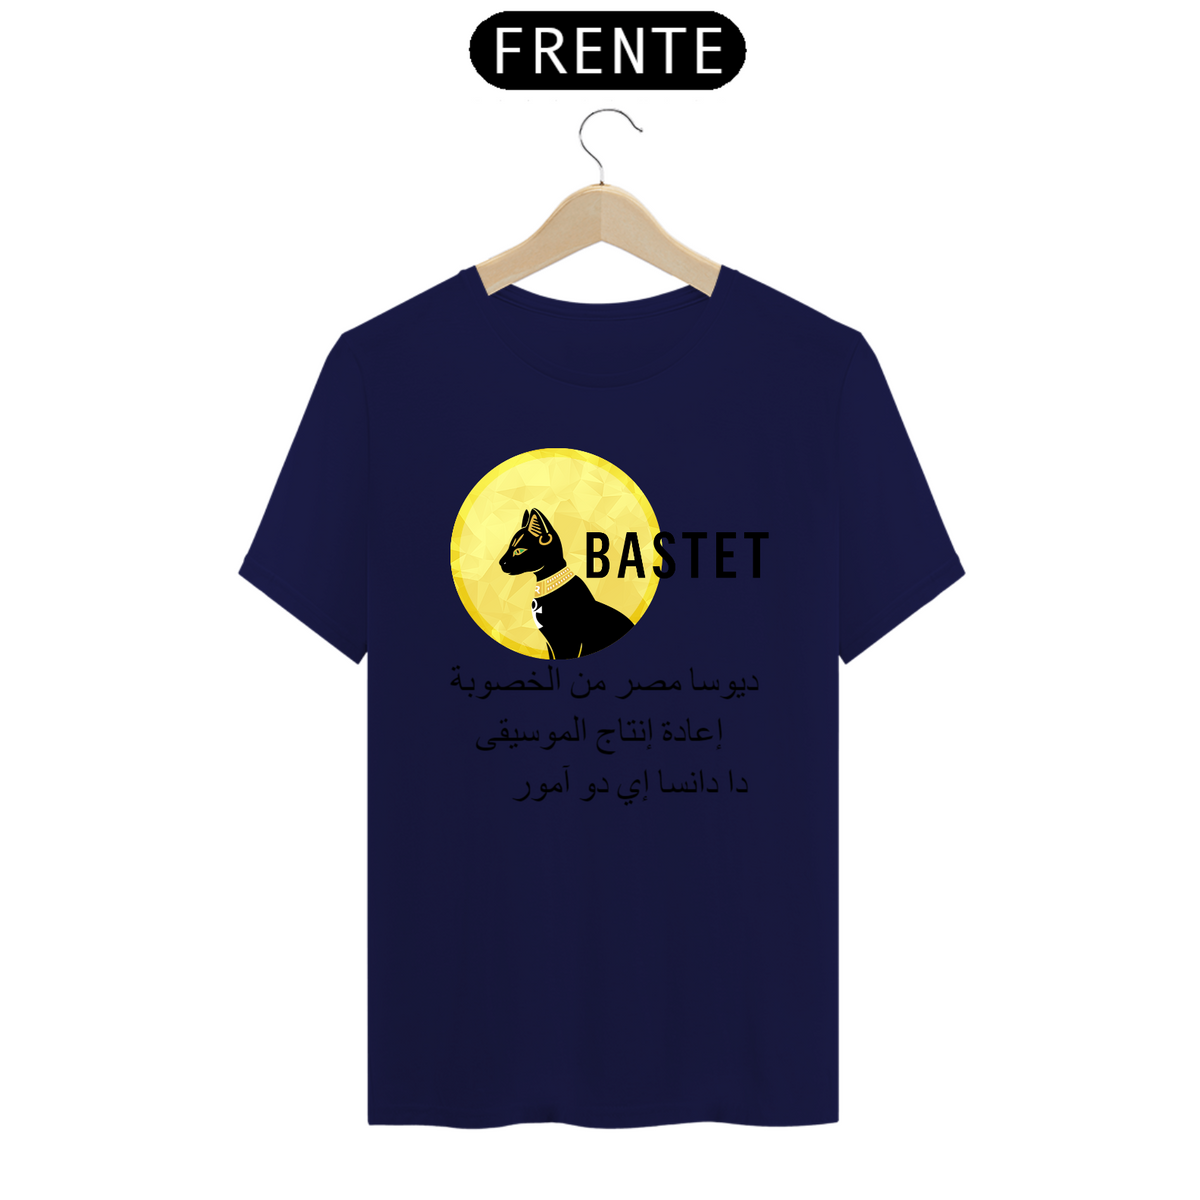 Nome do produto: Bastet